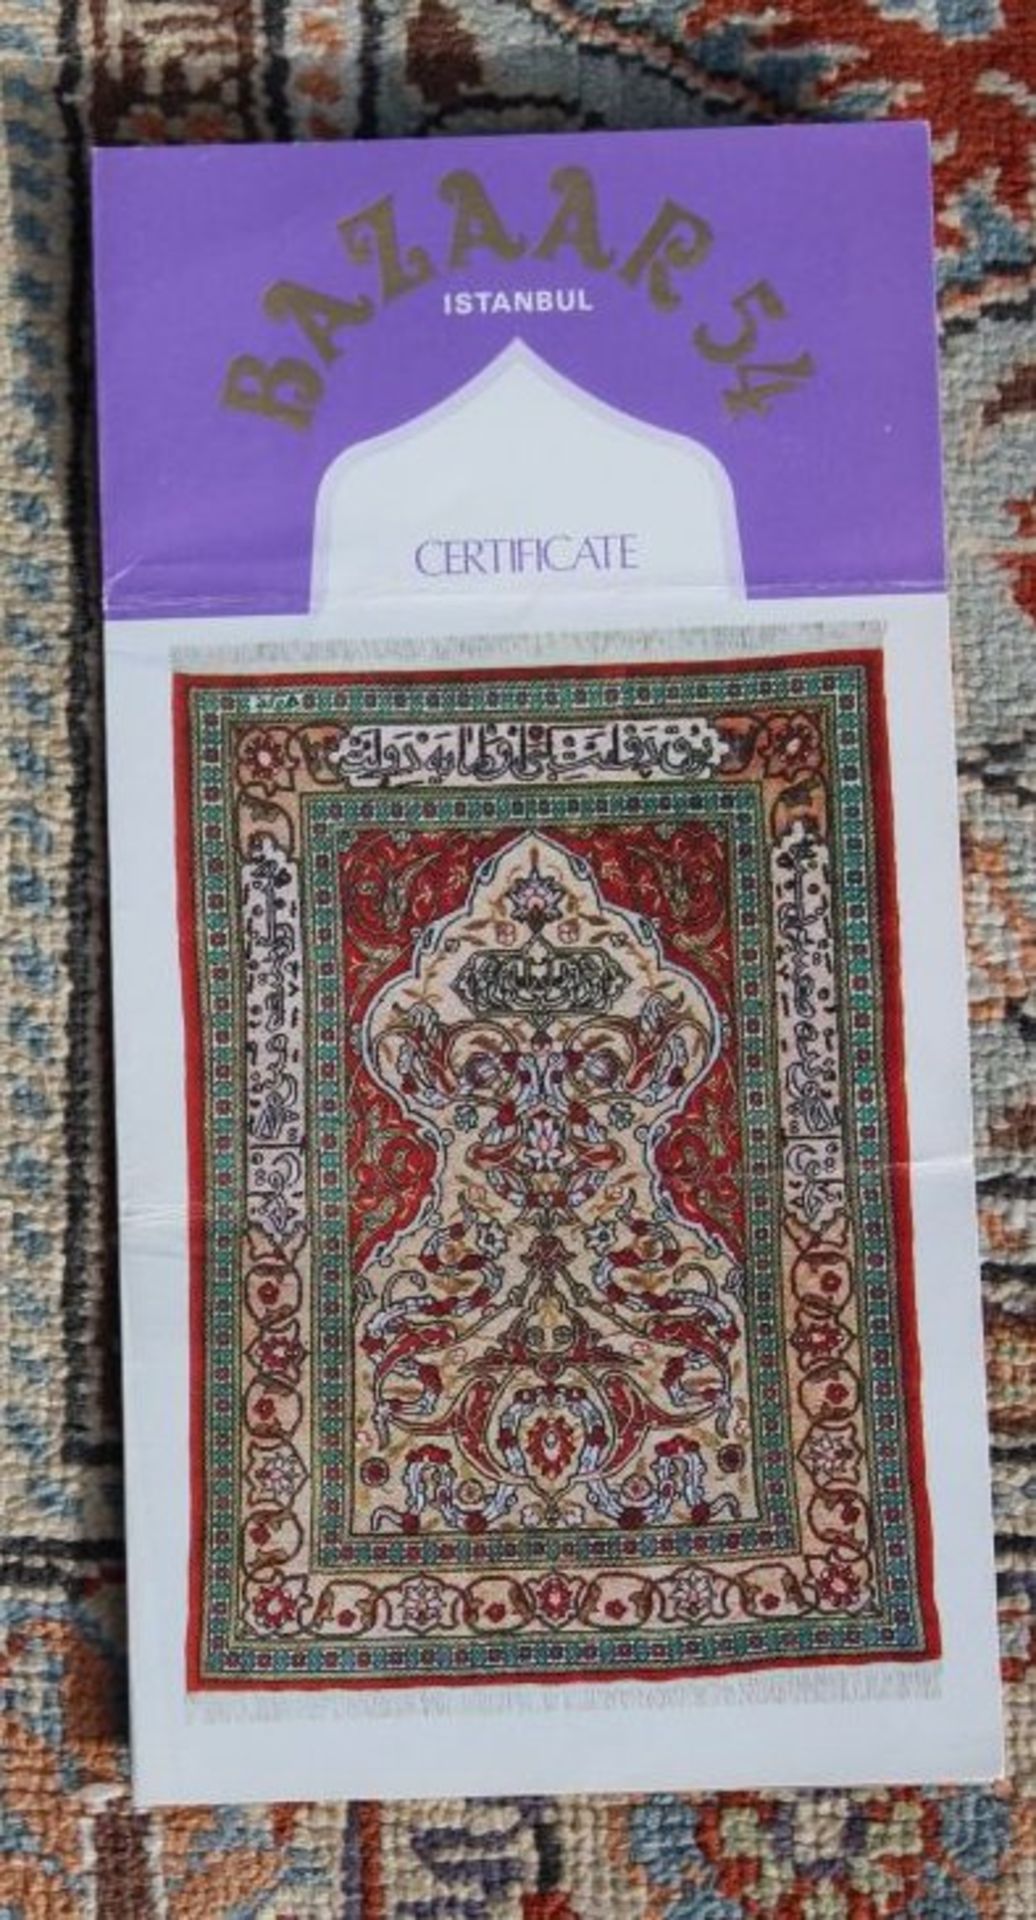 kl. Brücke, Kayseri, florales Muster, Baumwolle/Seide, guter Zustand, Zertifikat anbei, 134 x 89cm. - Bild 5 aus 6